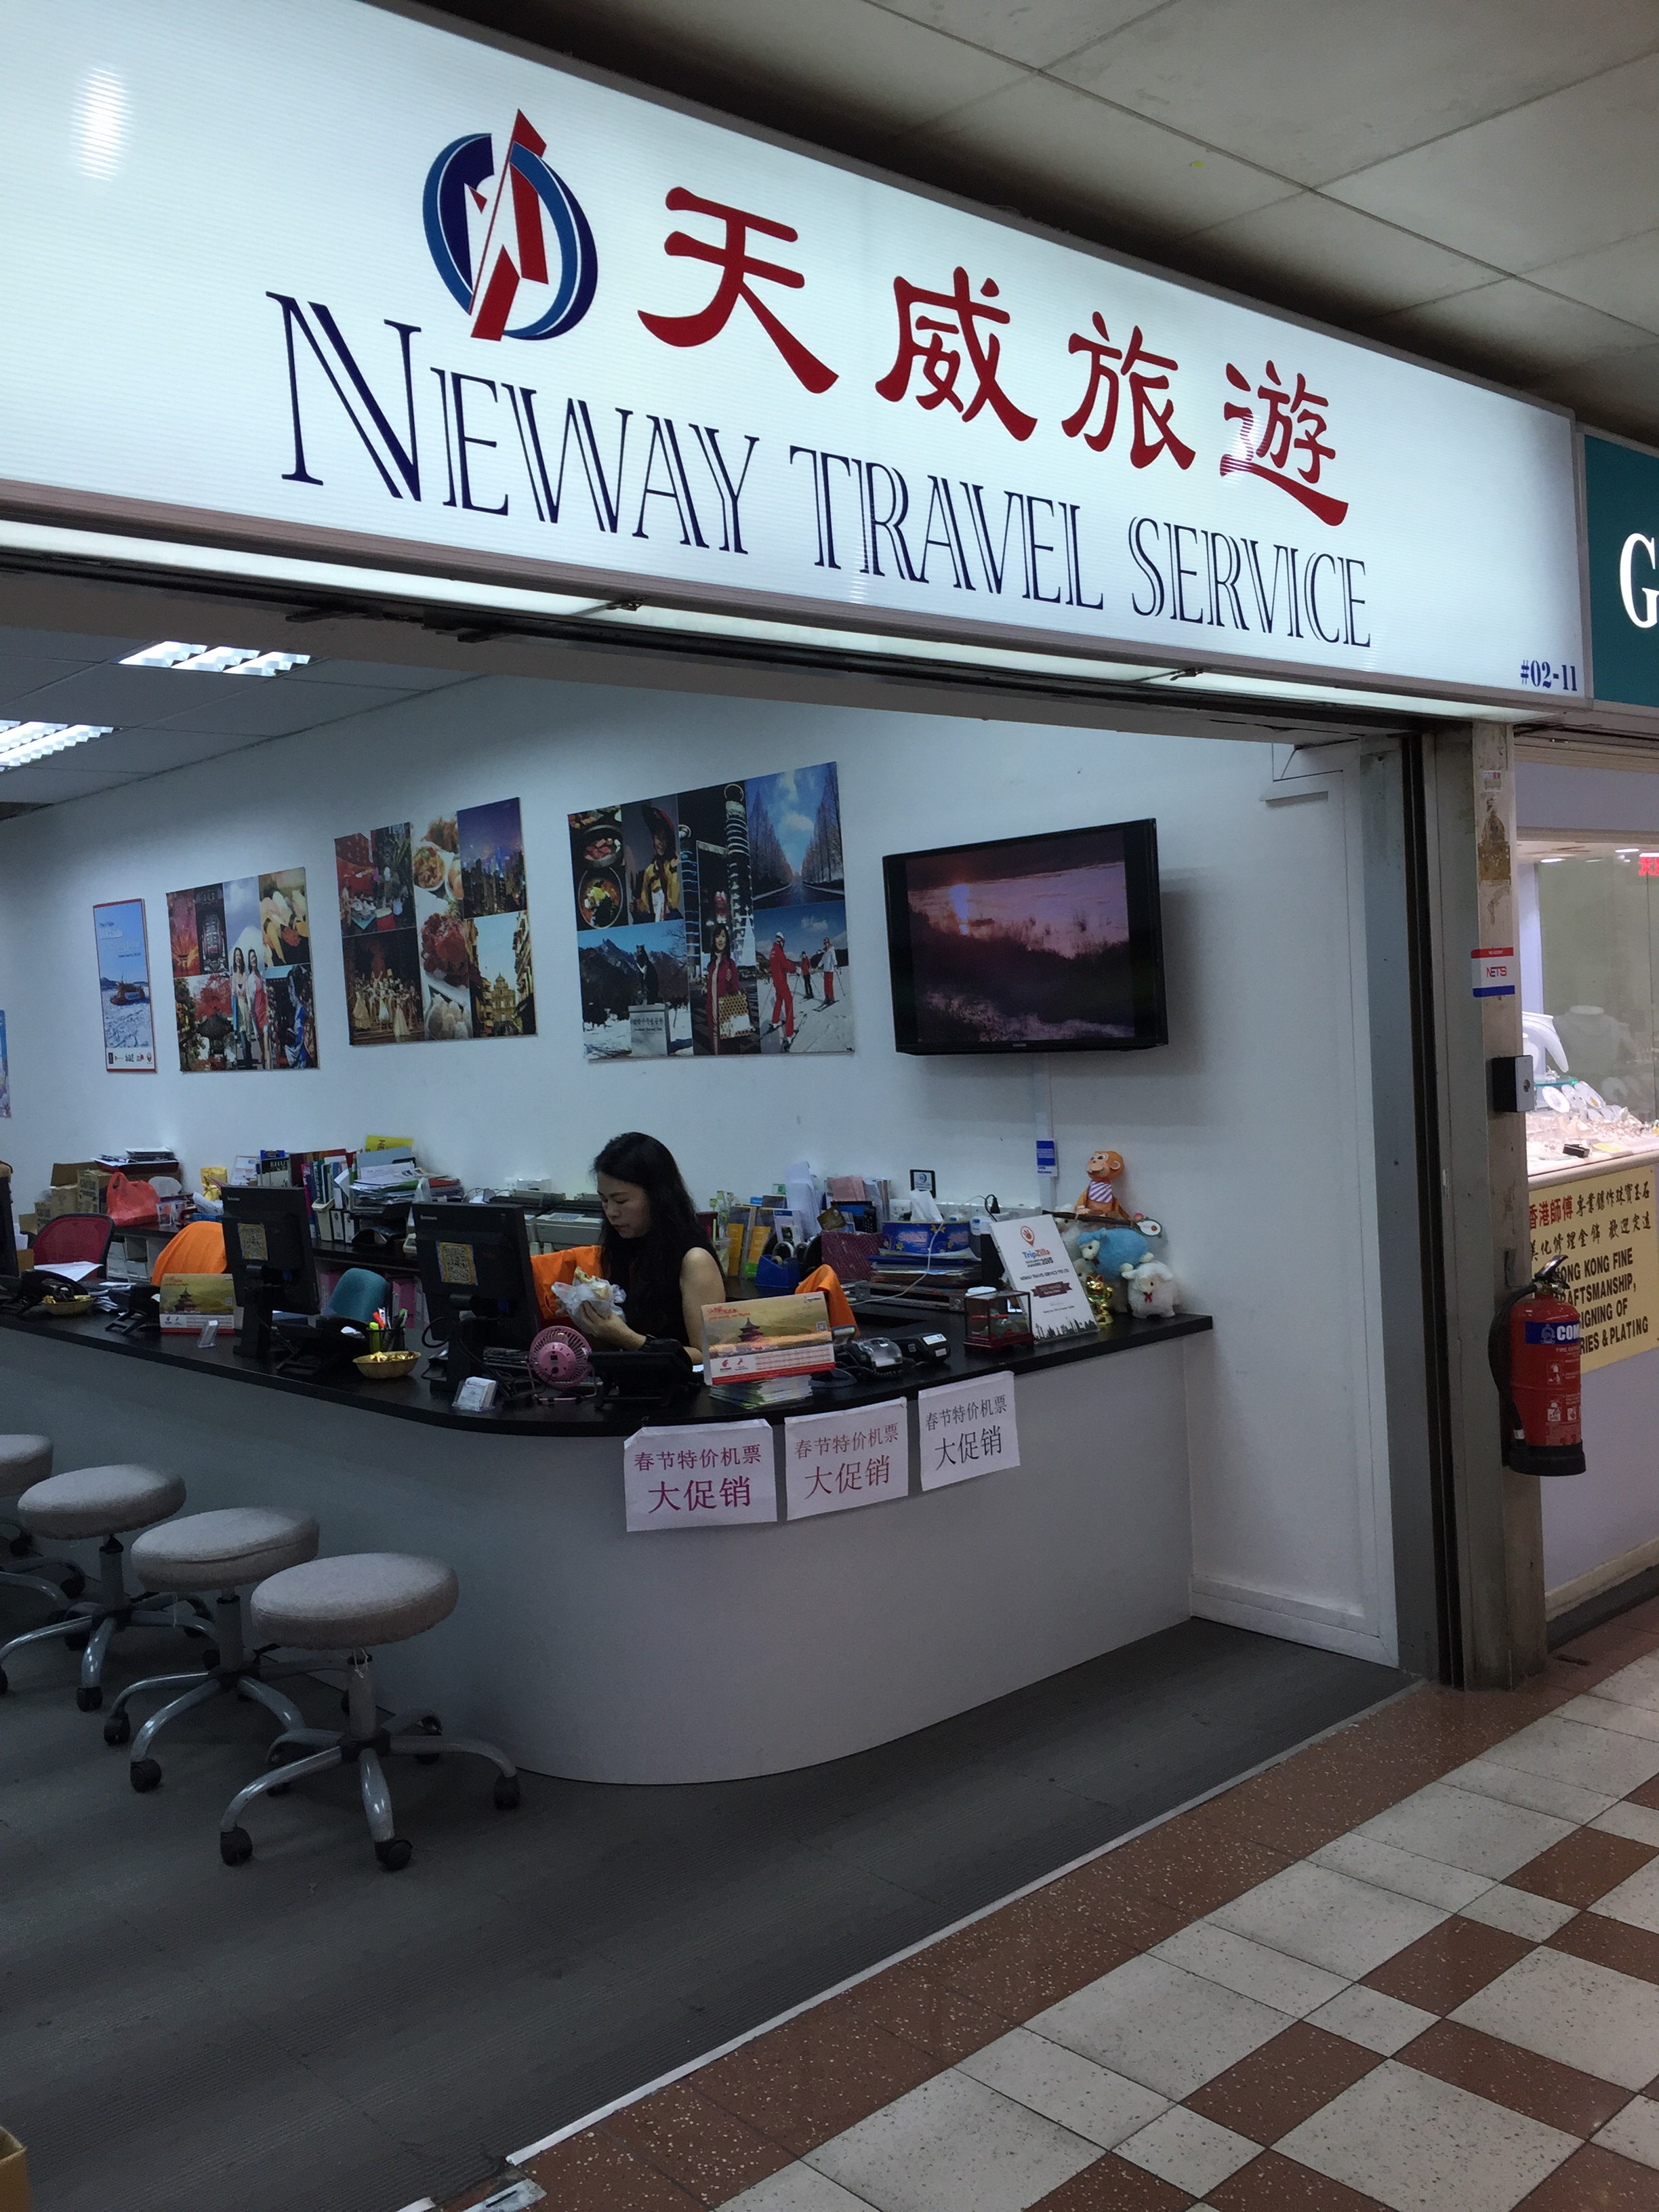 neway travel singapore review